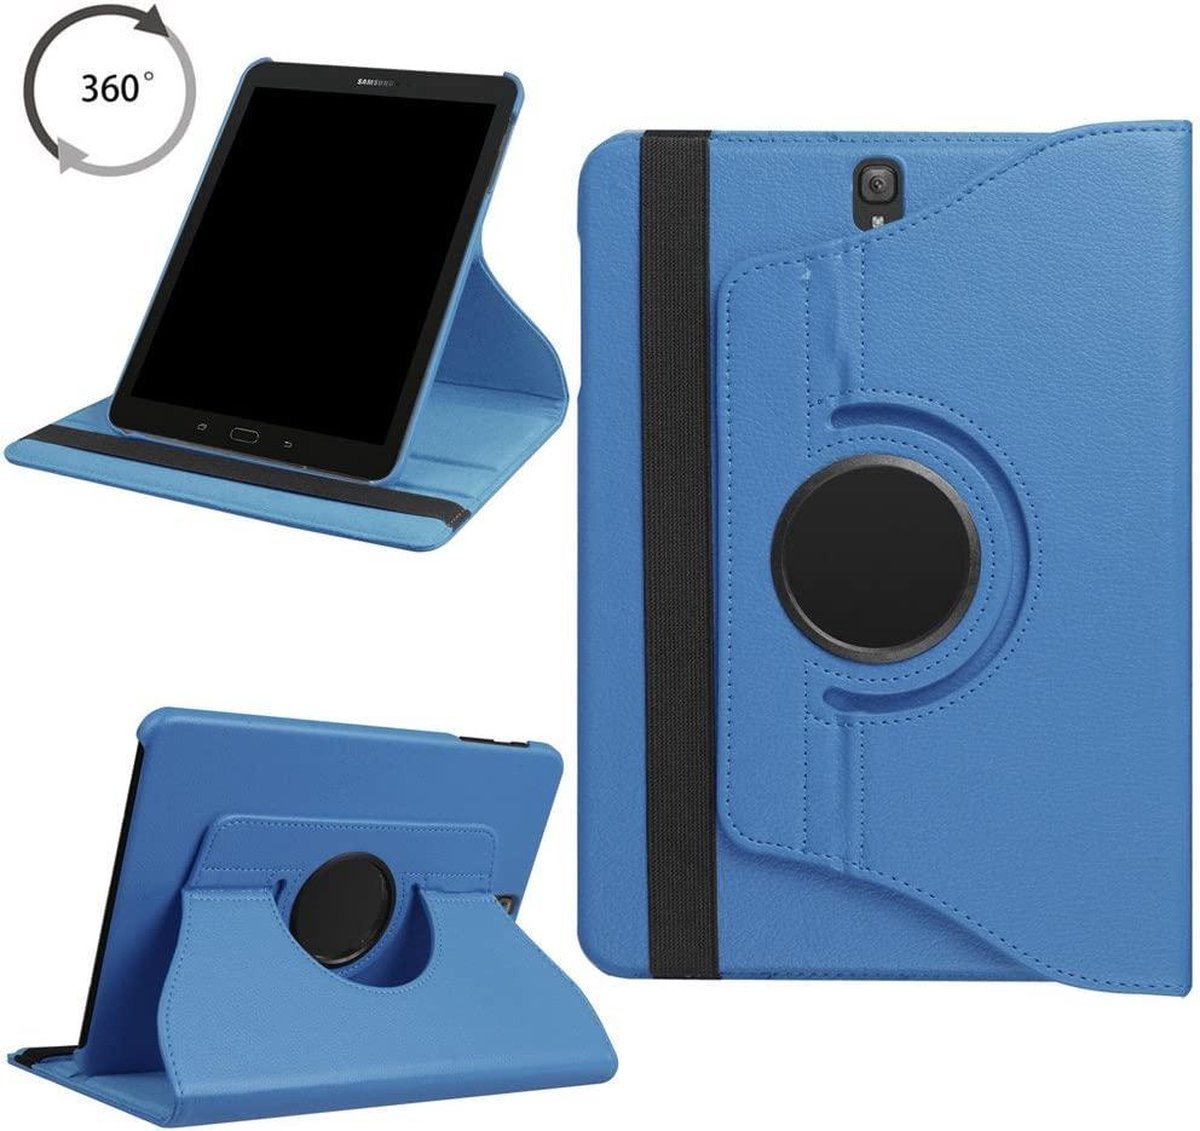 Draaibaar Hoesje - Rotation Tabletcase - Multi stand Case Geschikt voor: Samsung Galaxy Tab S2 9,7 inch T810 T815 - licht blauw